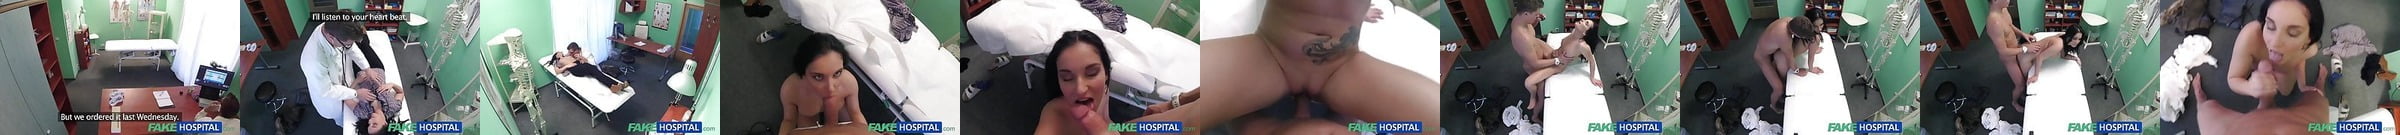 Fakehospital Nurse Sucks Dick For Sperm Sample Hd Porn 31 Xhamster